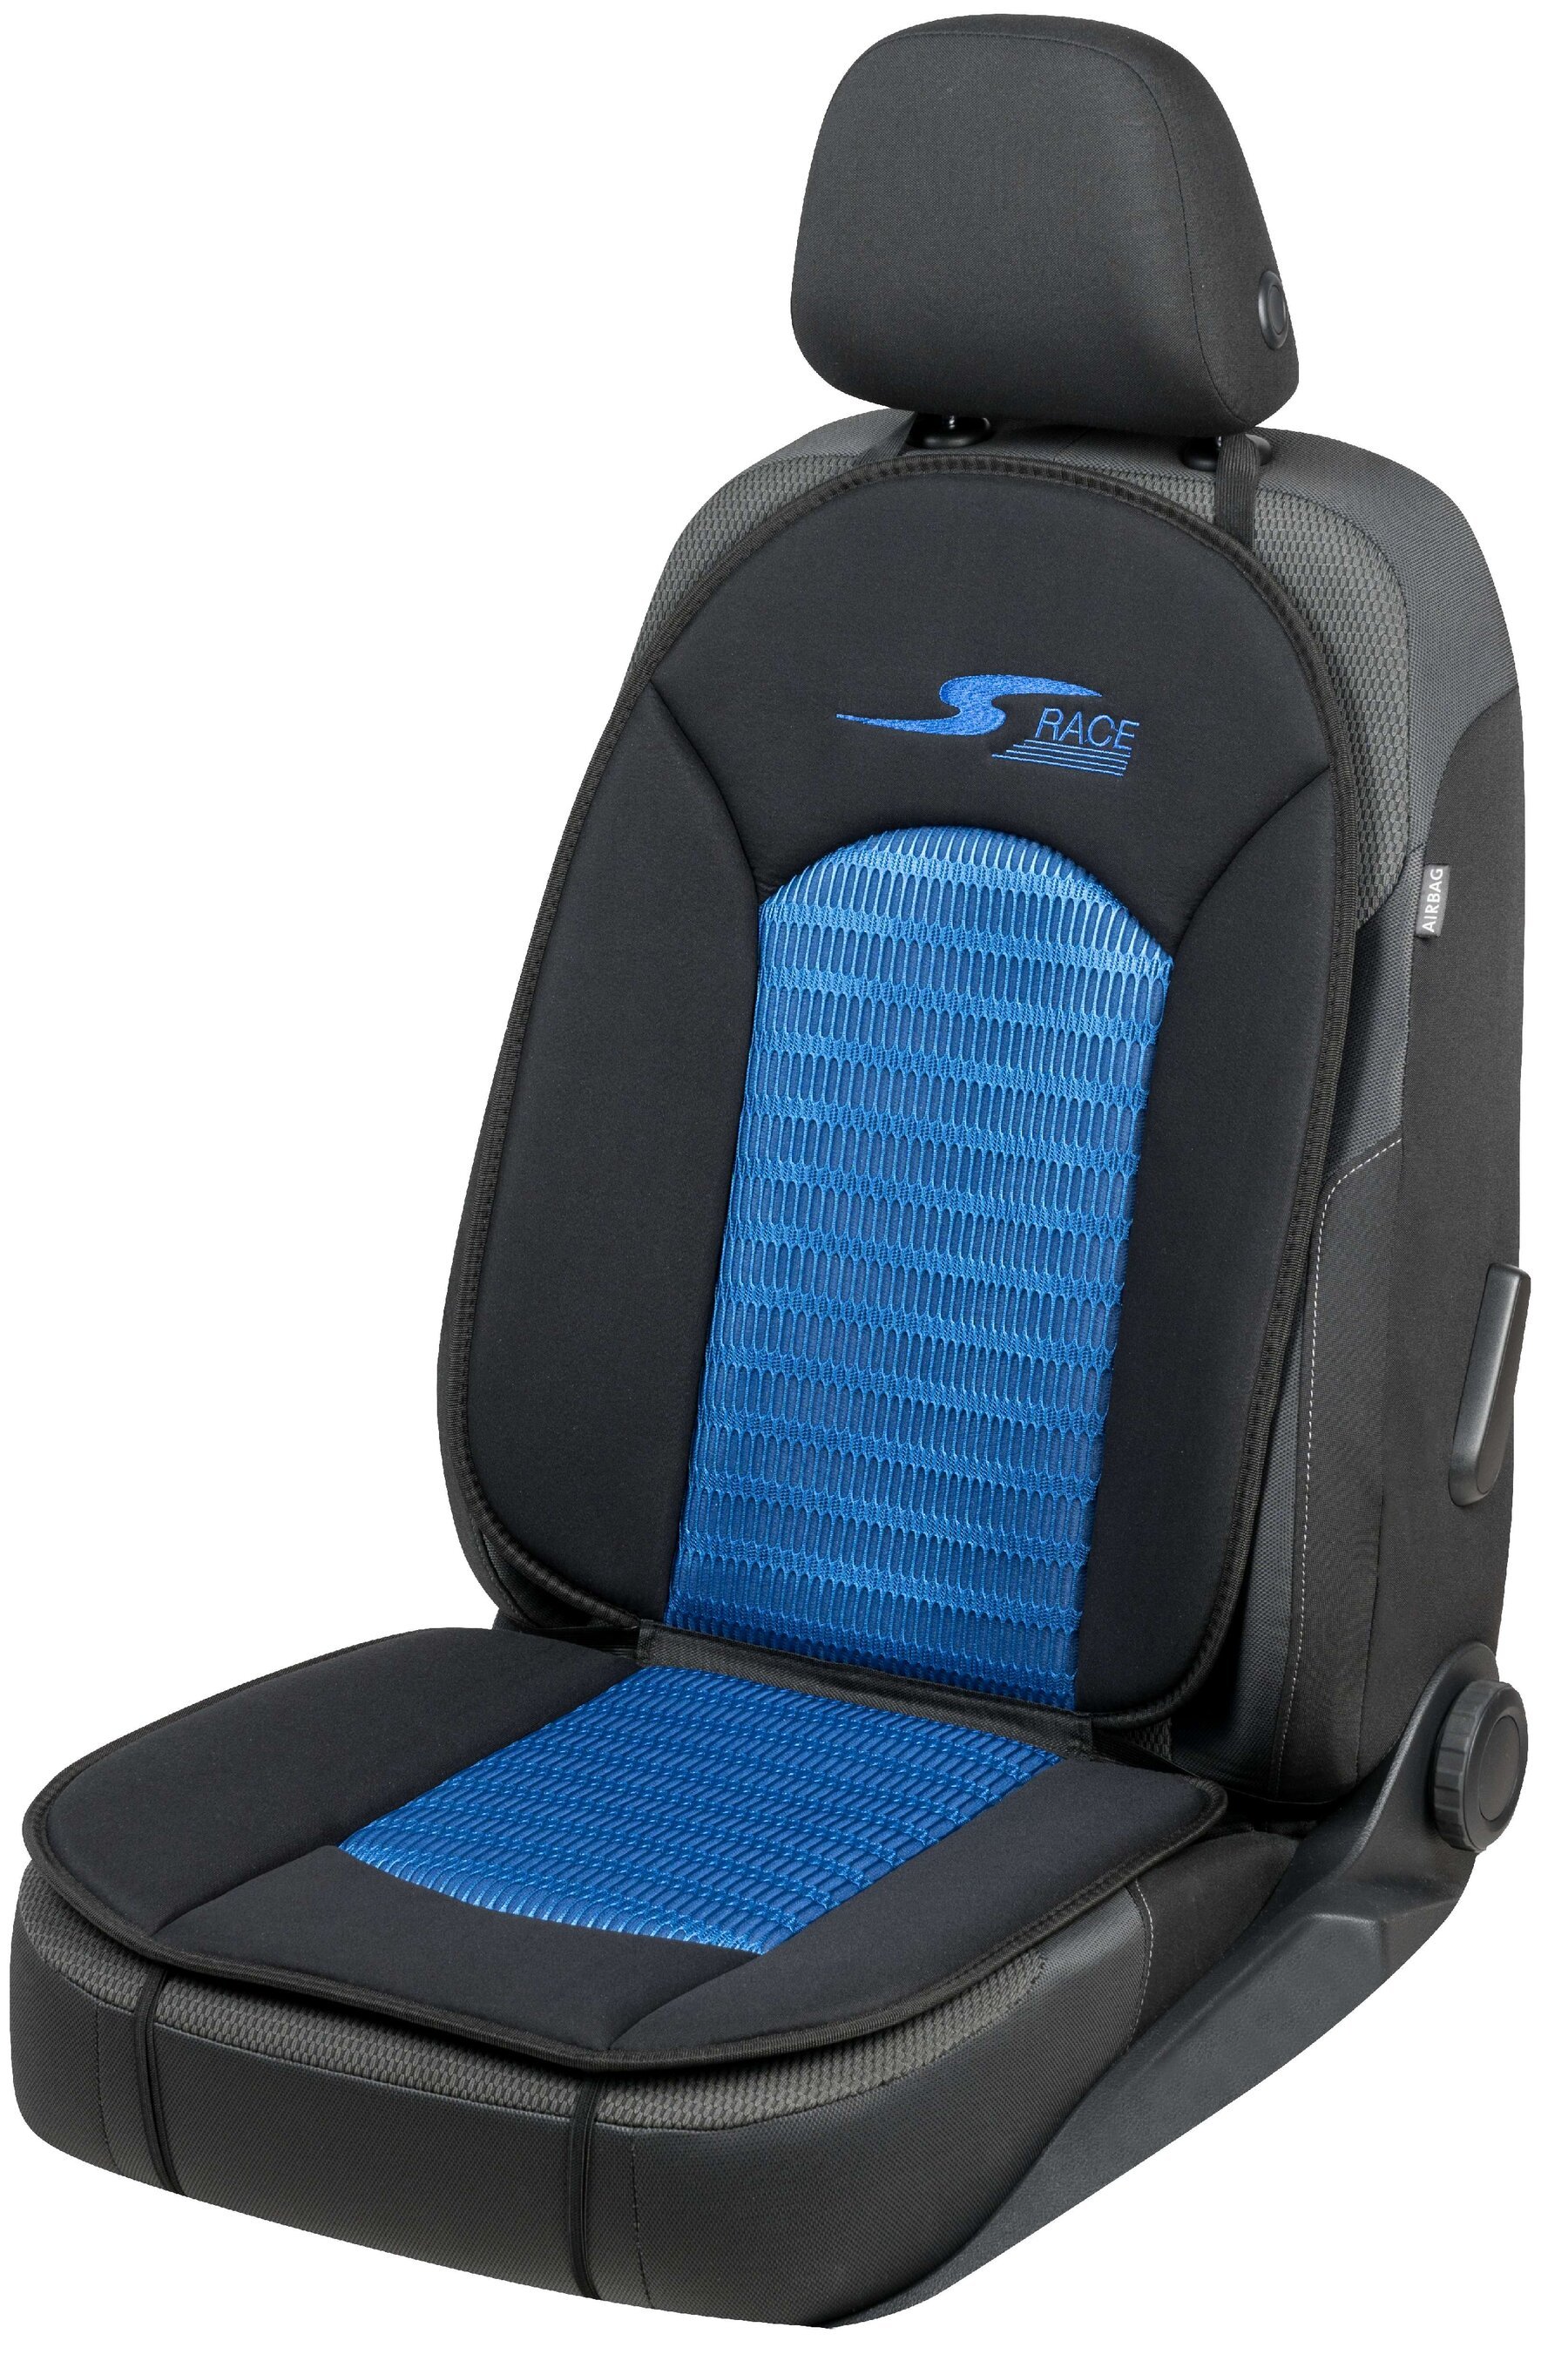 Car Seat cover S-Race blue